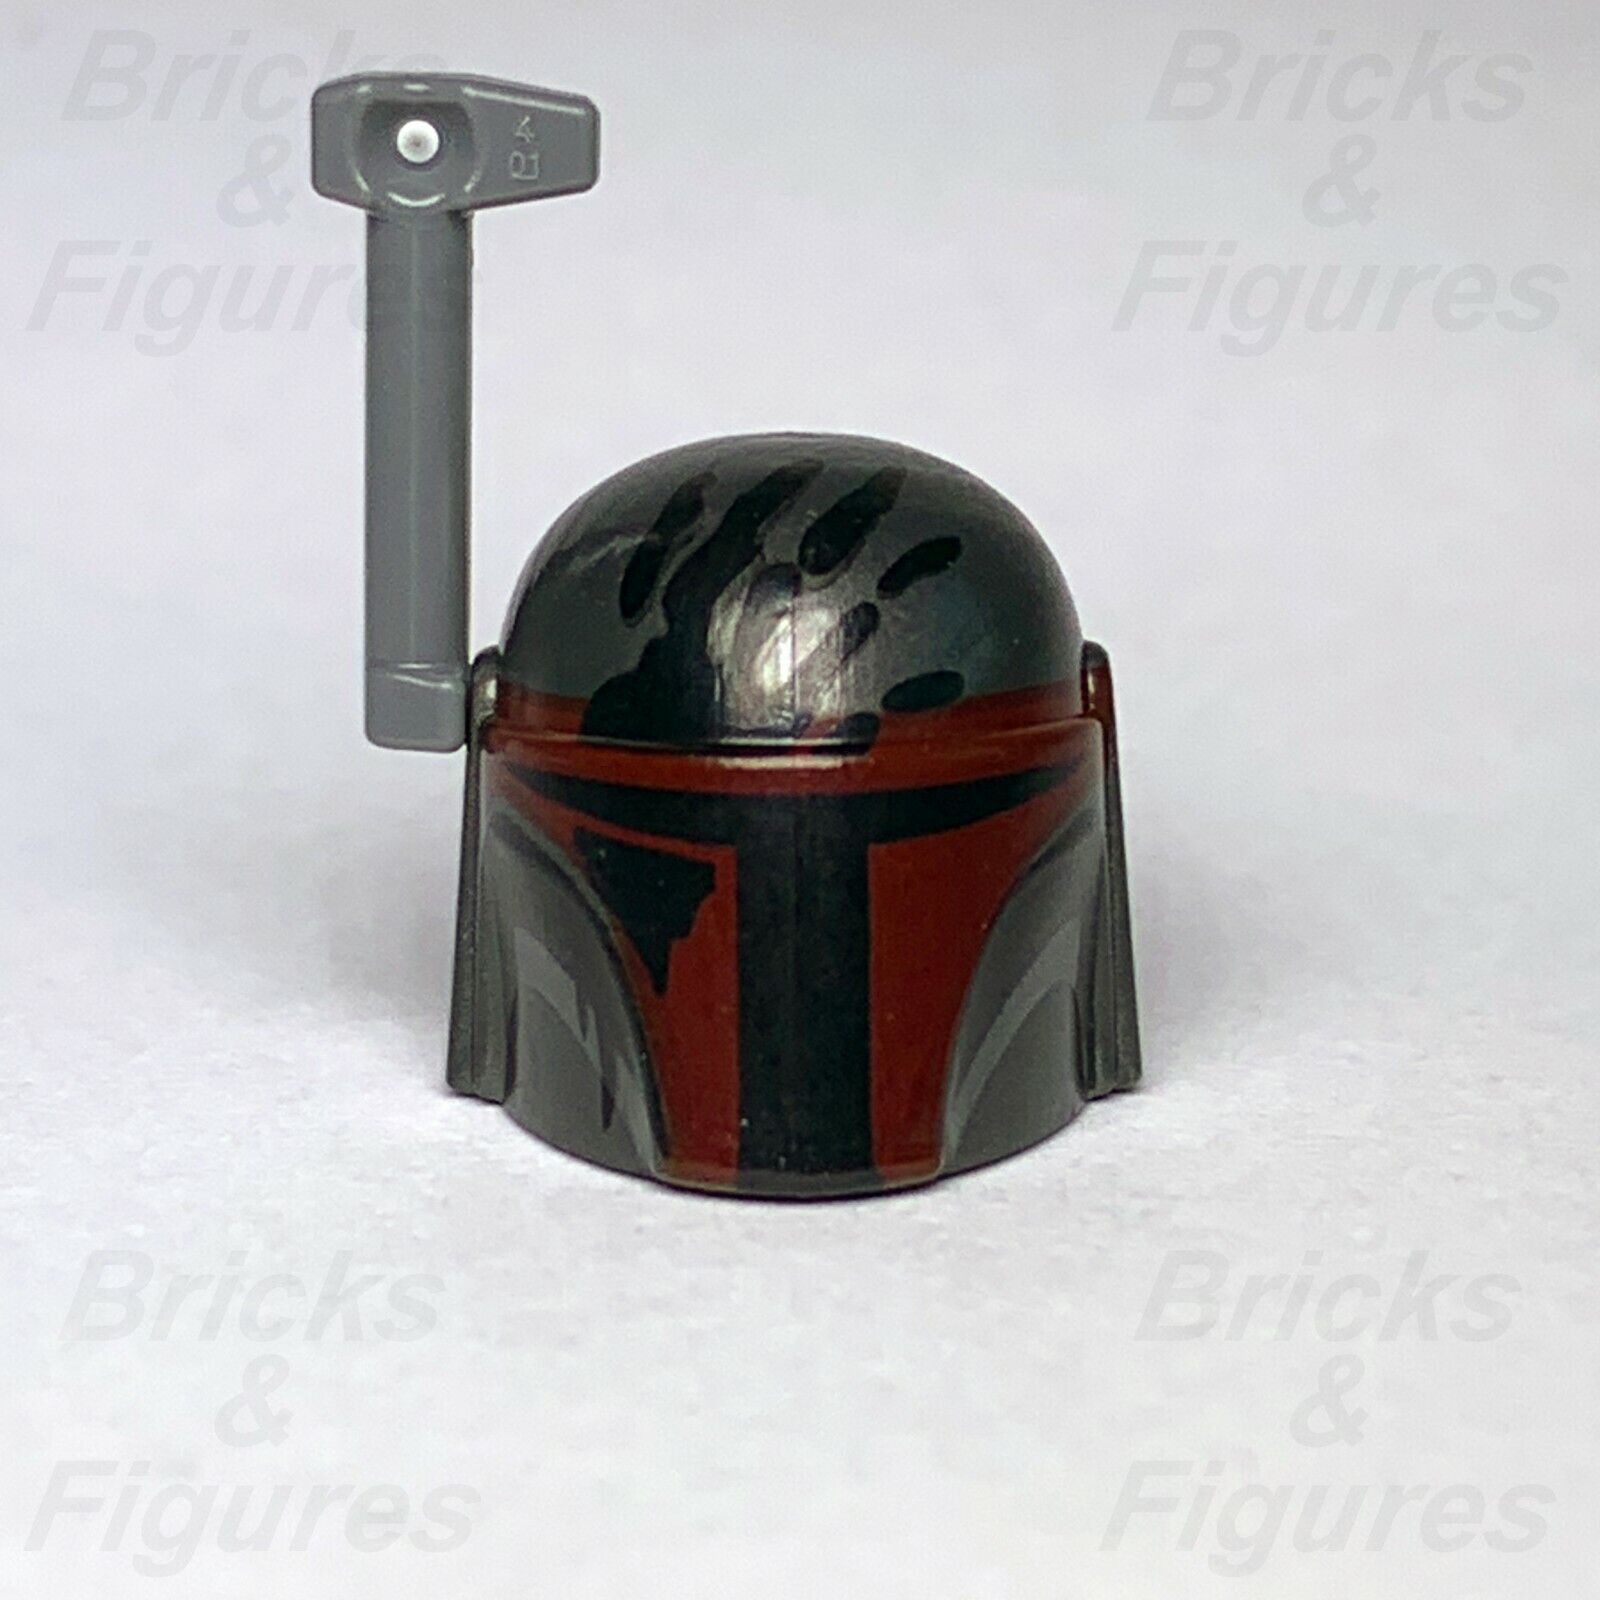 Star Wars LEGO Mandalorian Helmet with Handprint Rebels 75022 Genuine Parts